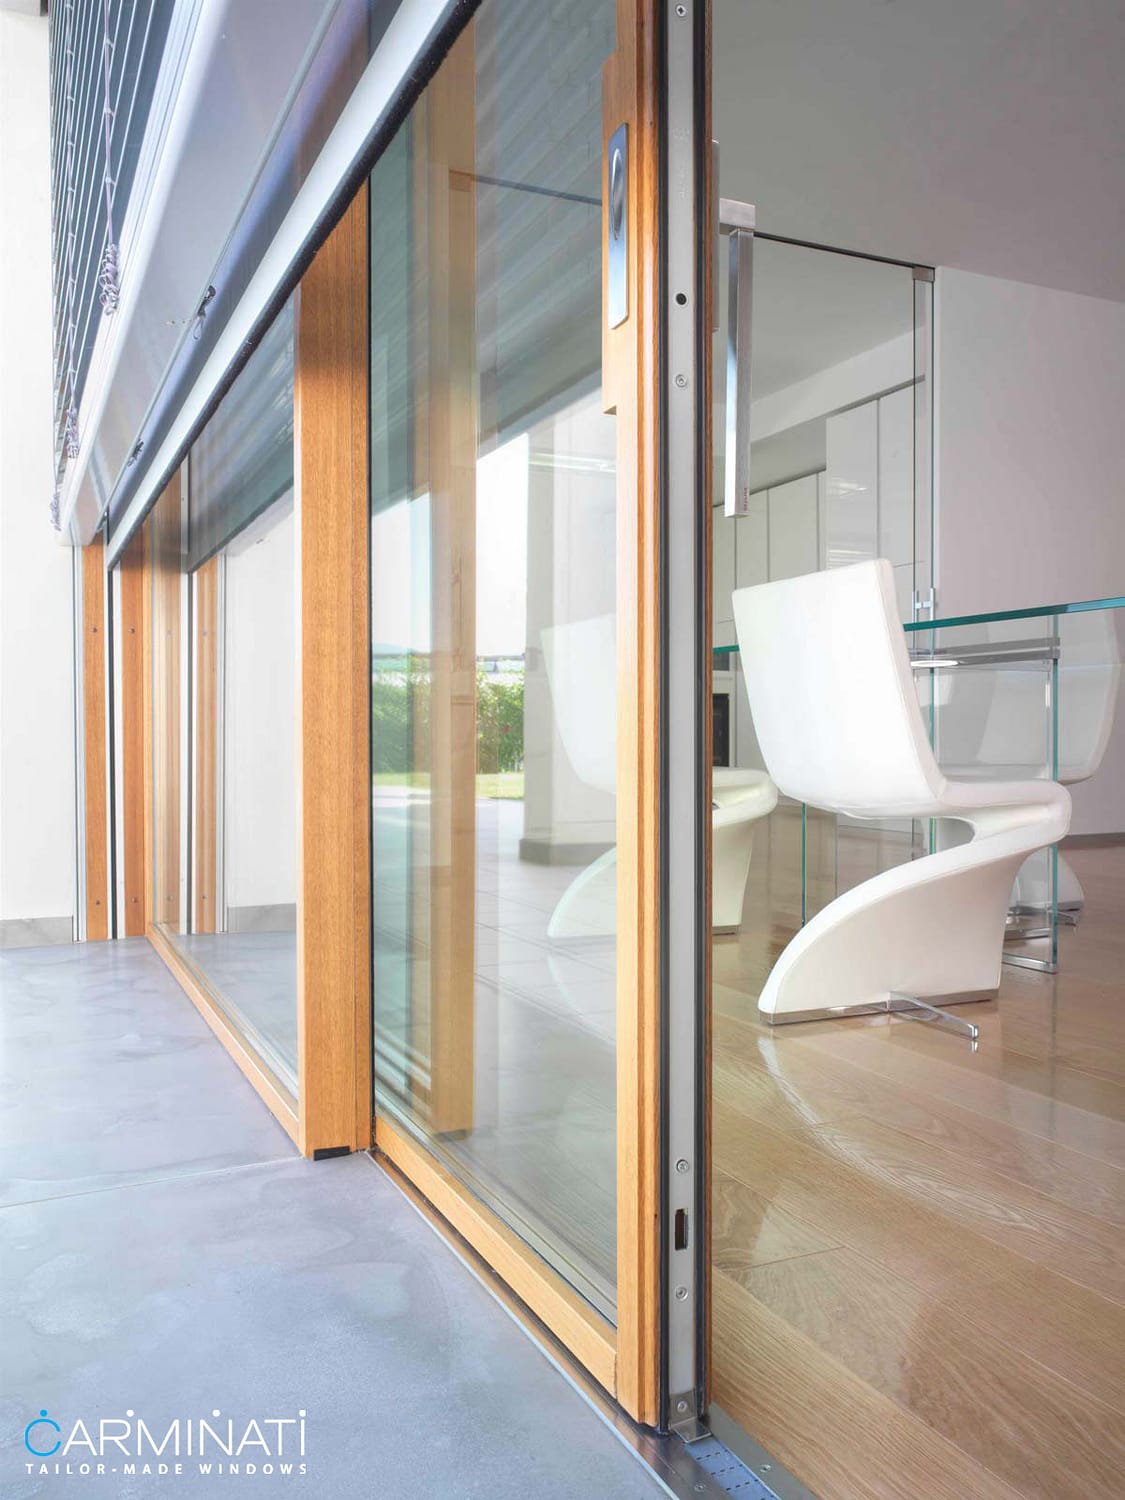 Carminati's Skyline minimal frame wood lift slide door system with embedded track